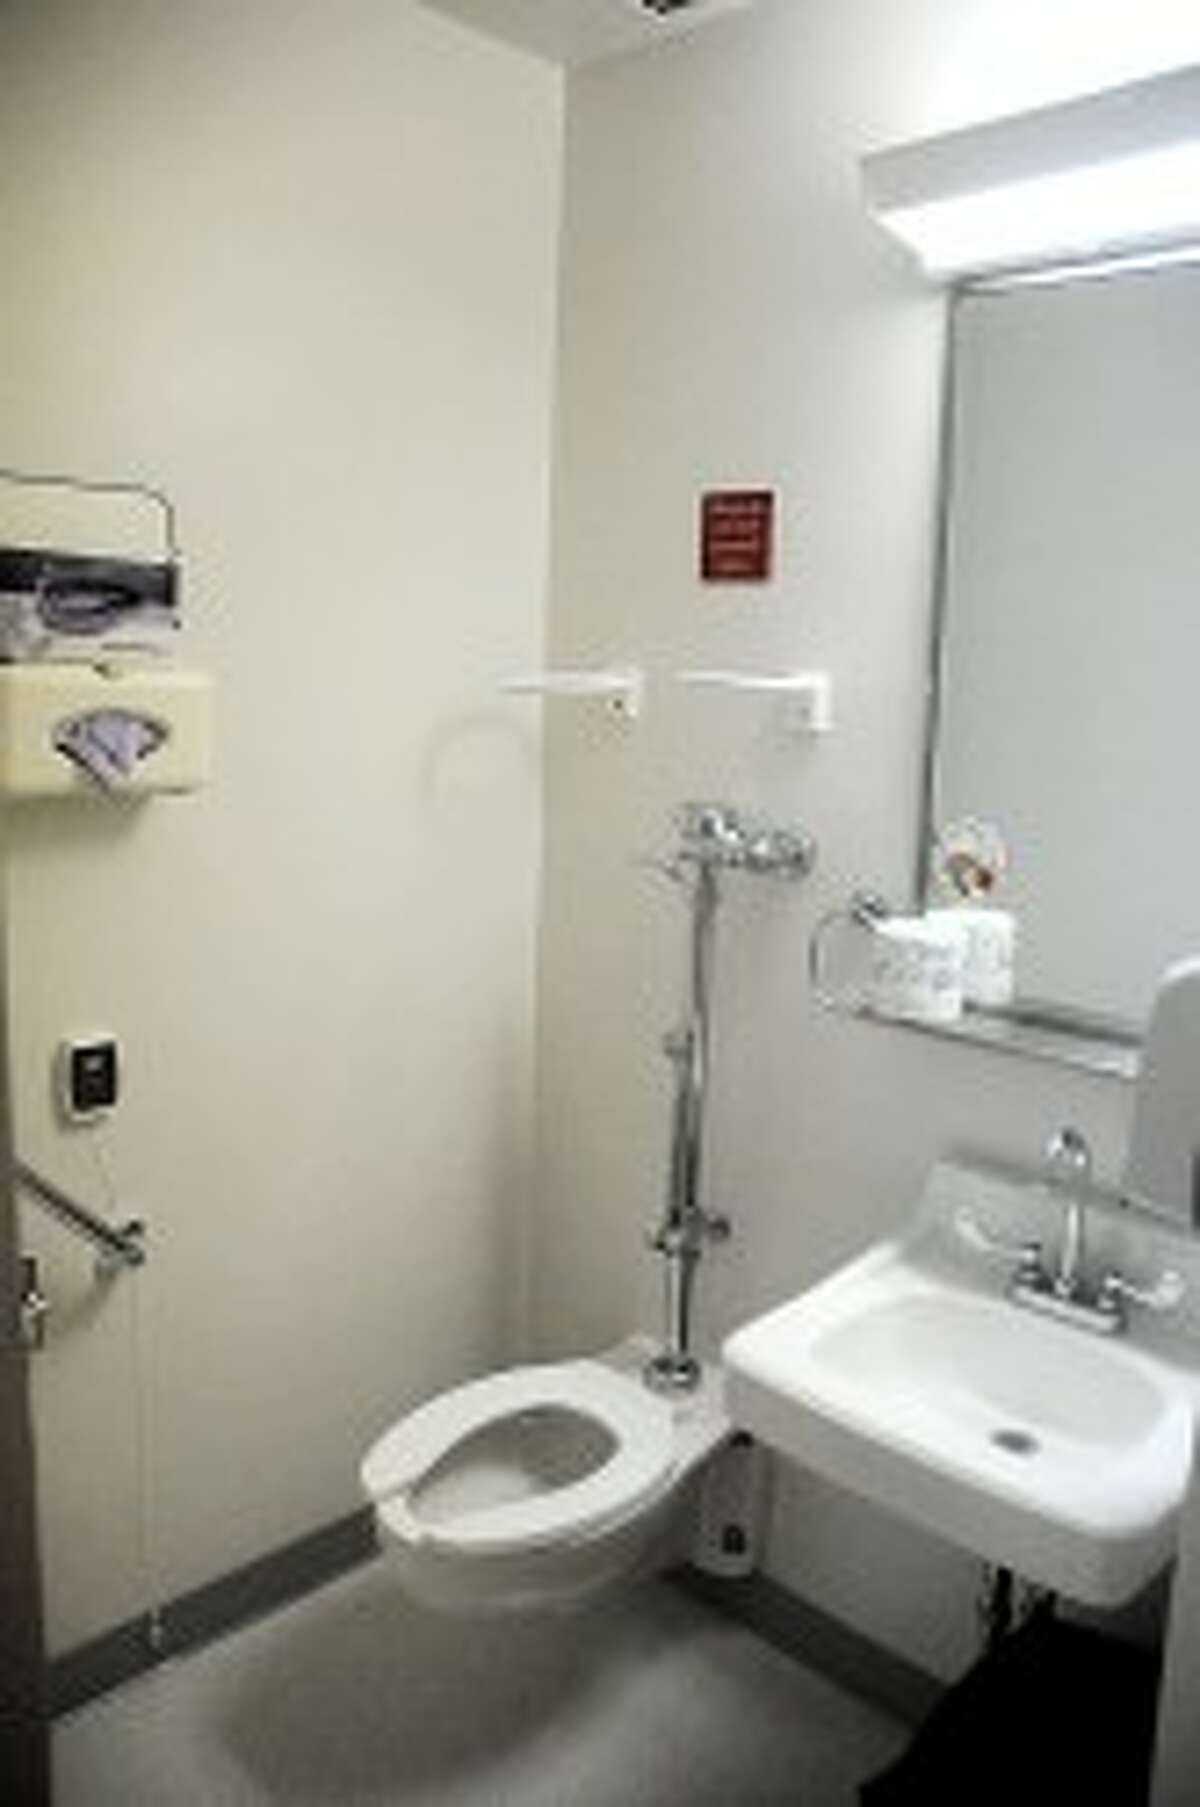 hospital patient room bathroom